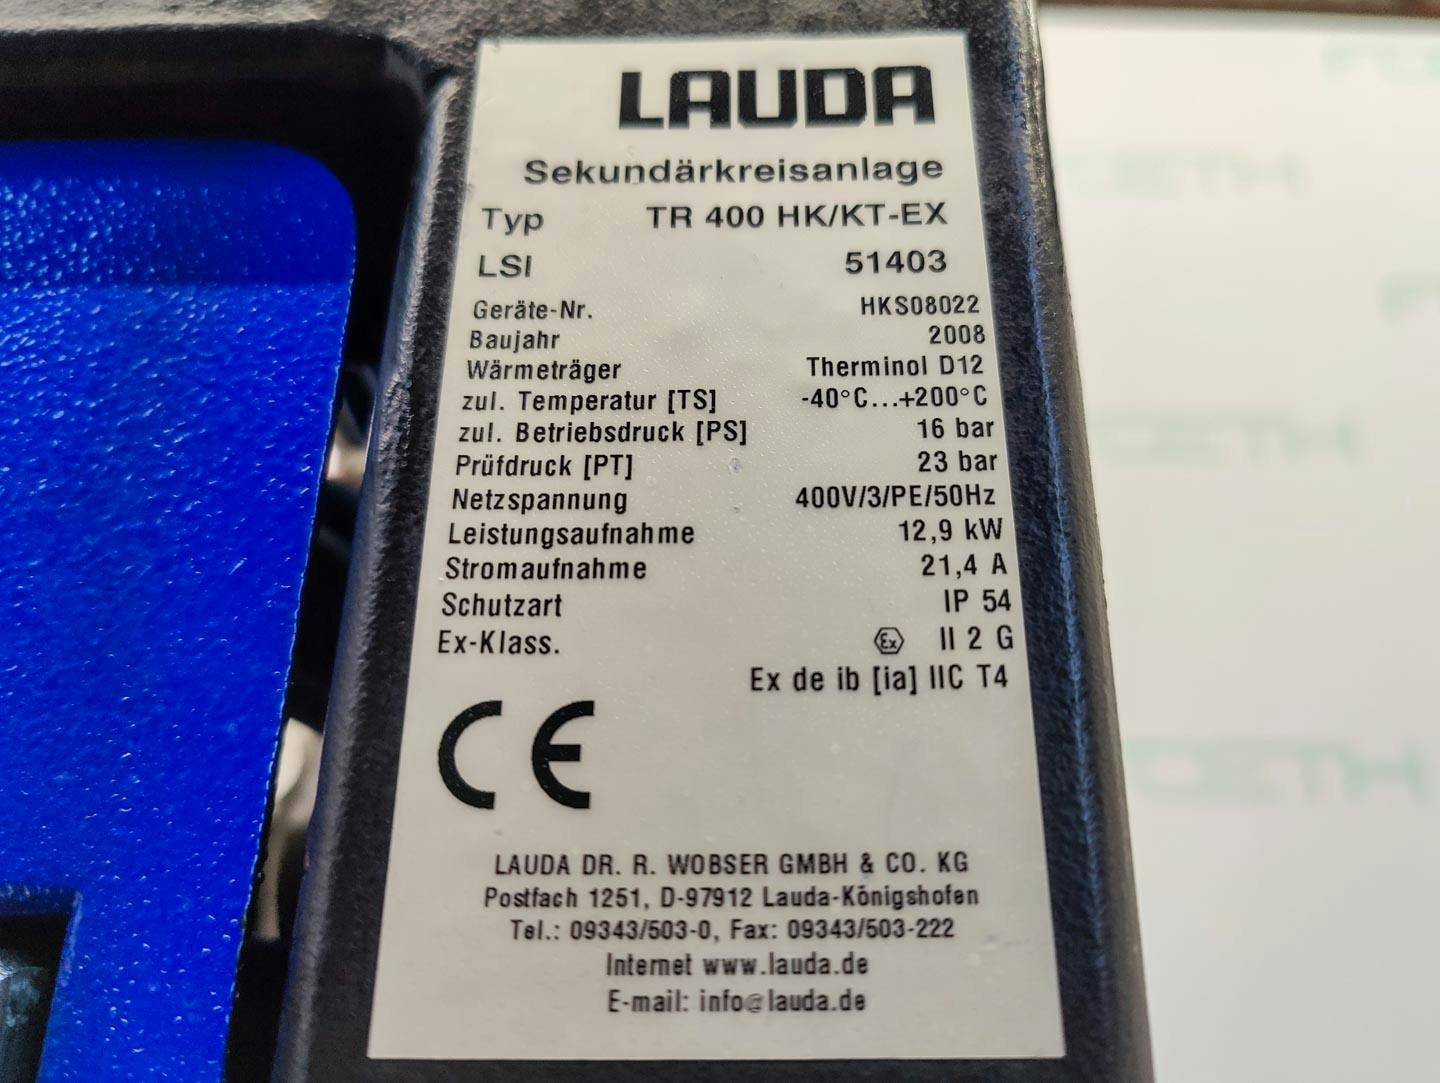 Lauda TR400 HK/KT-EX "secondary circuit system" - Atemperador - image 12